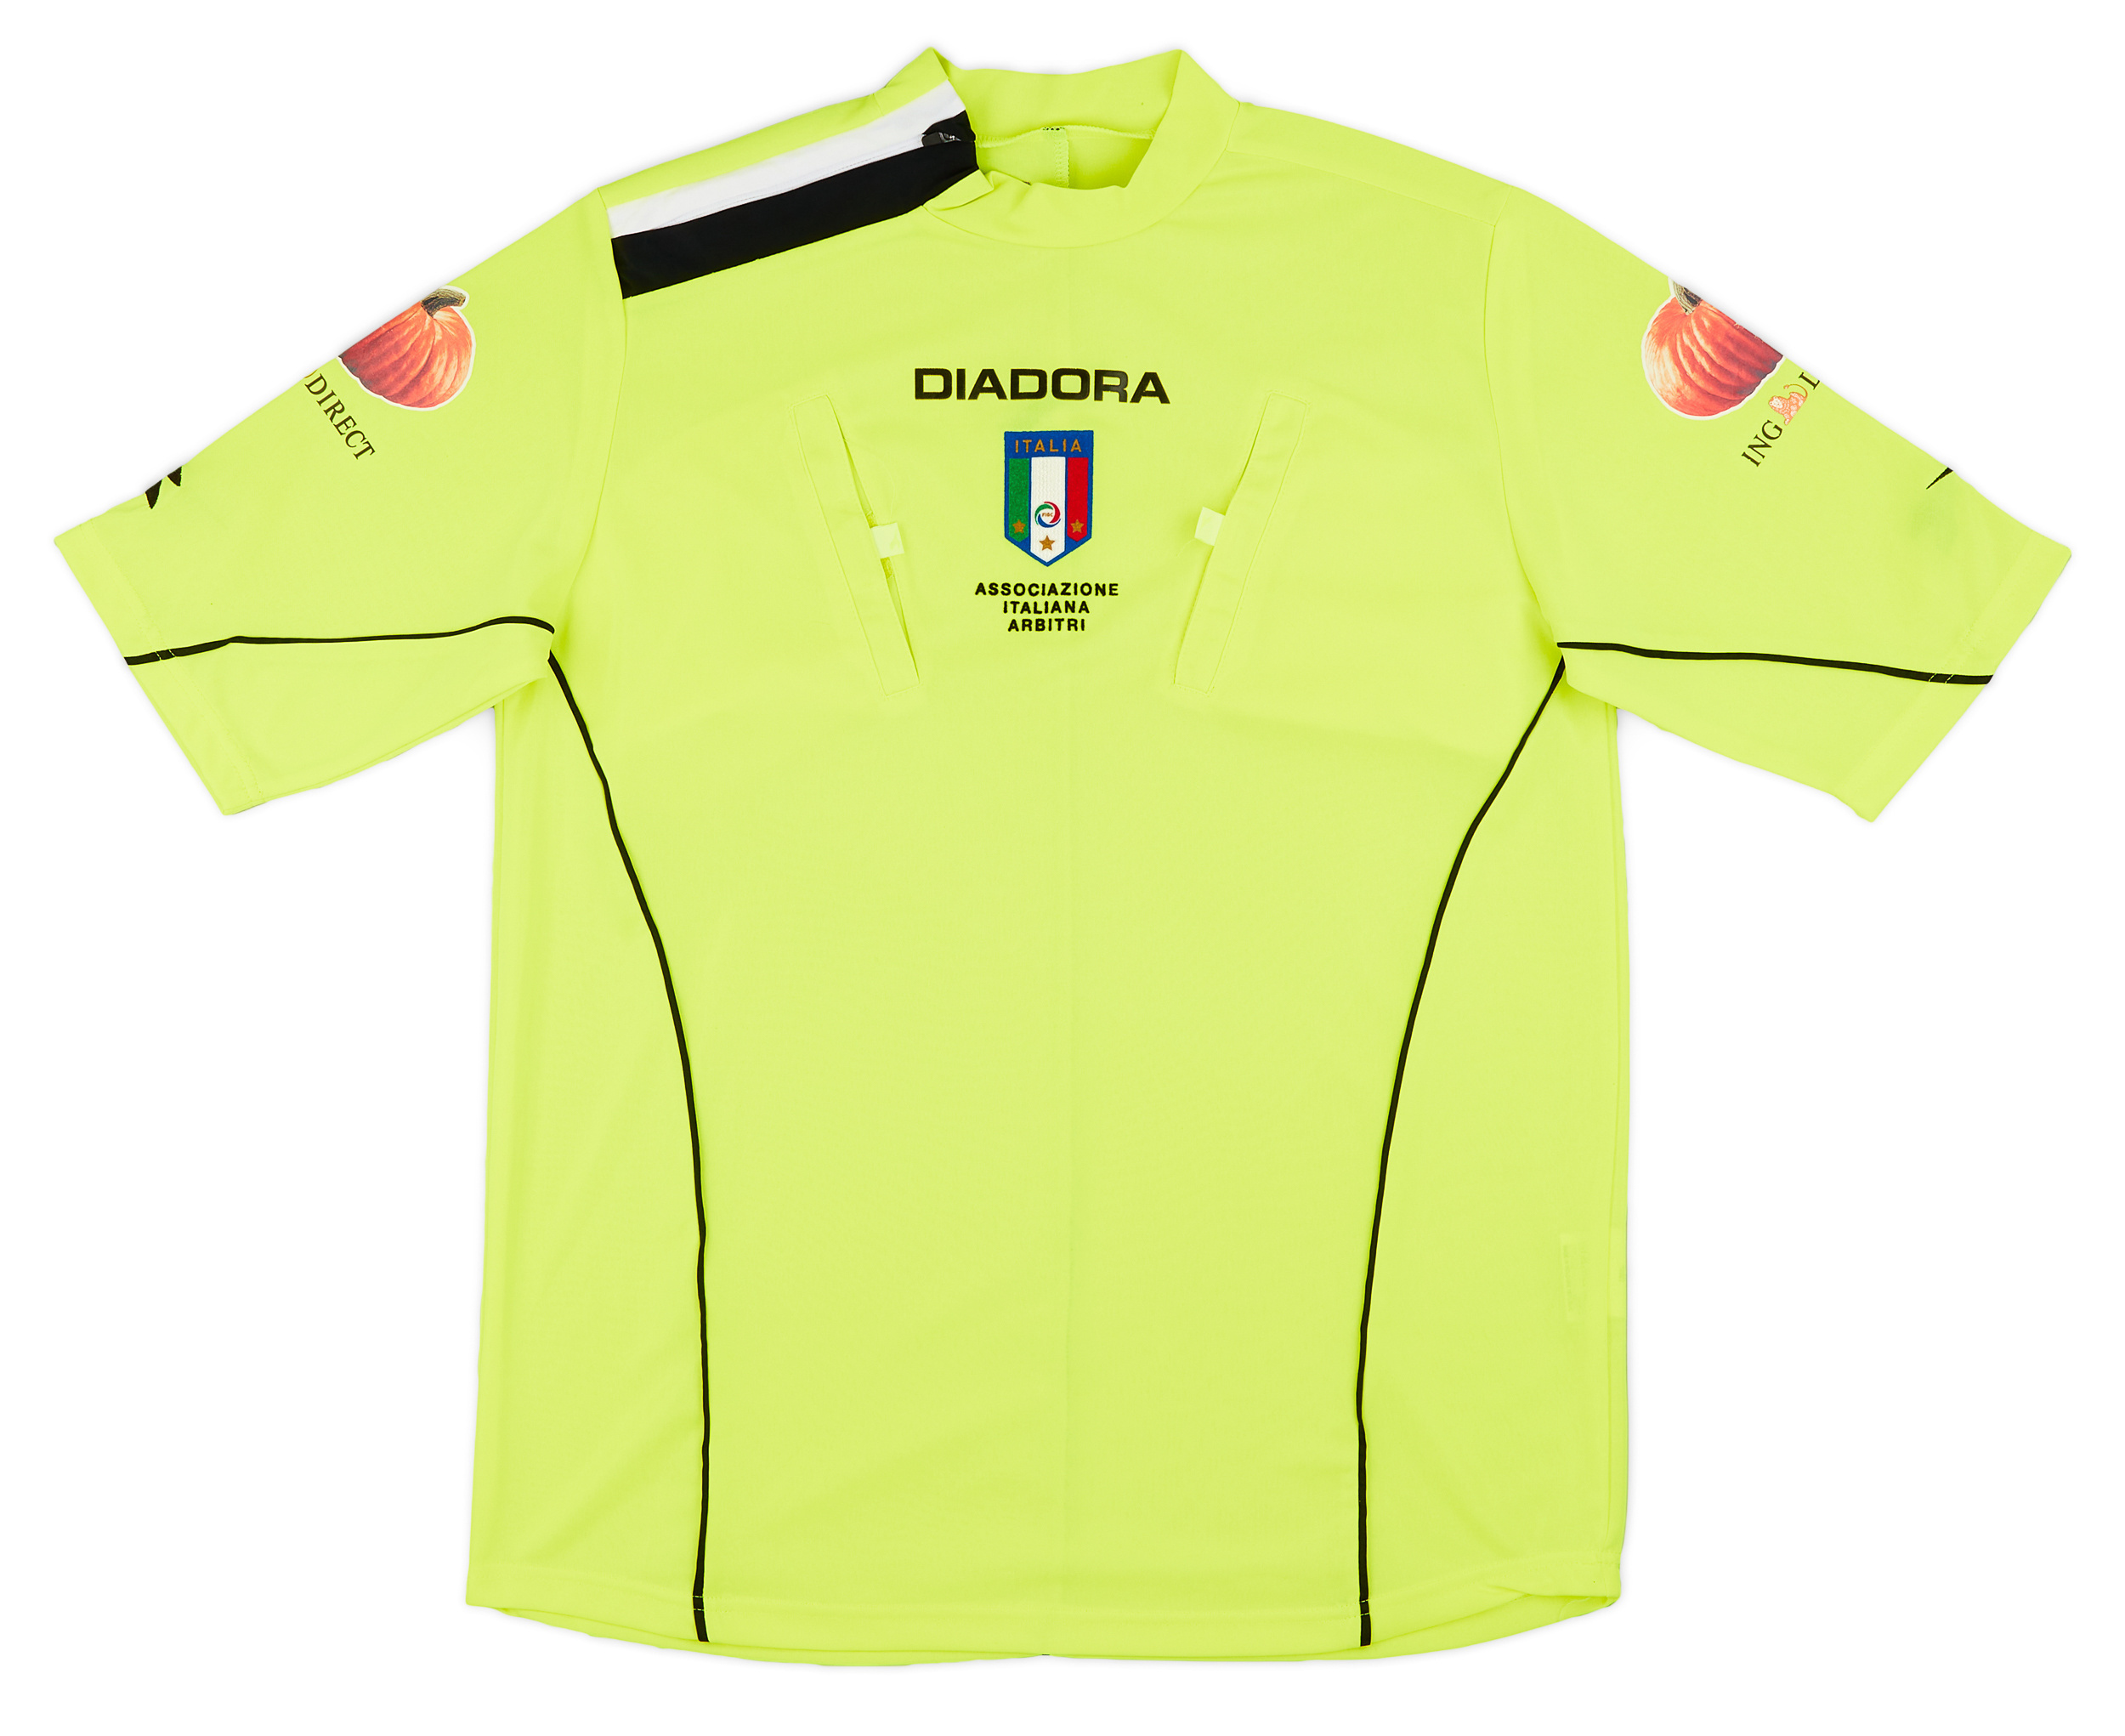 2008-10 Italy Diadora Referee Shirt - 6/10 - ()